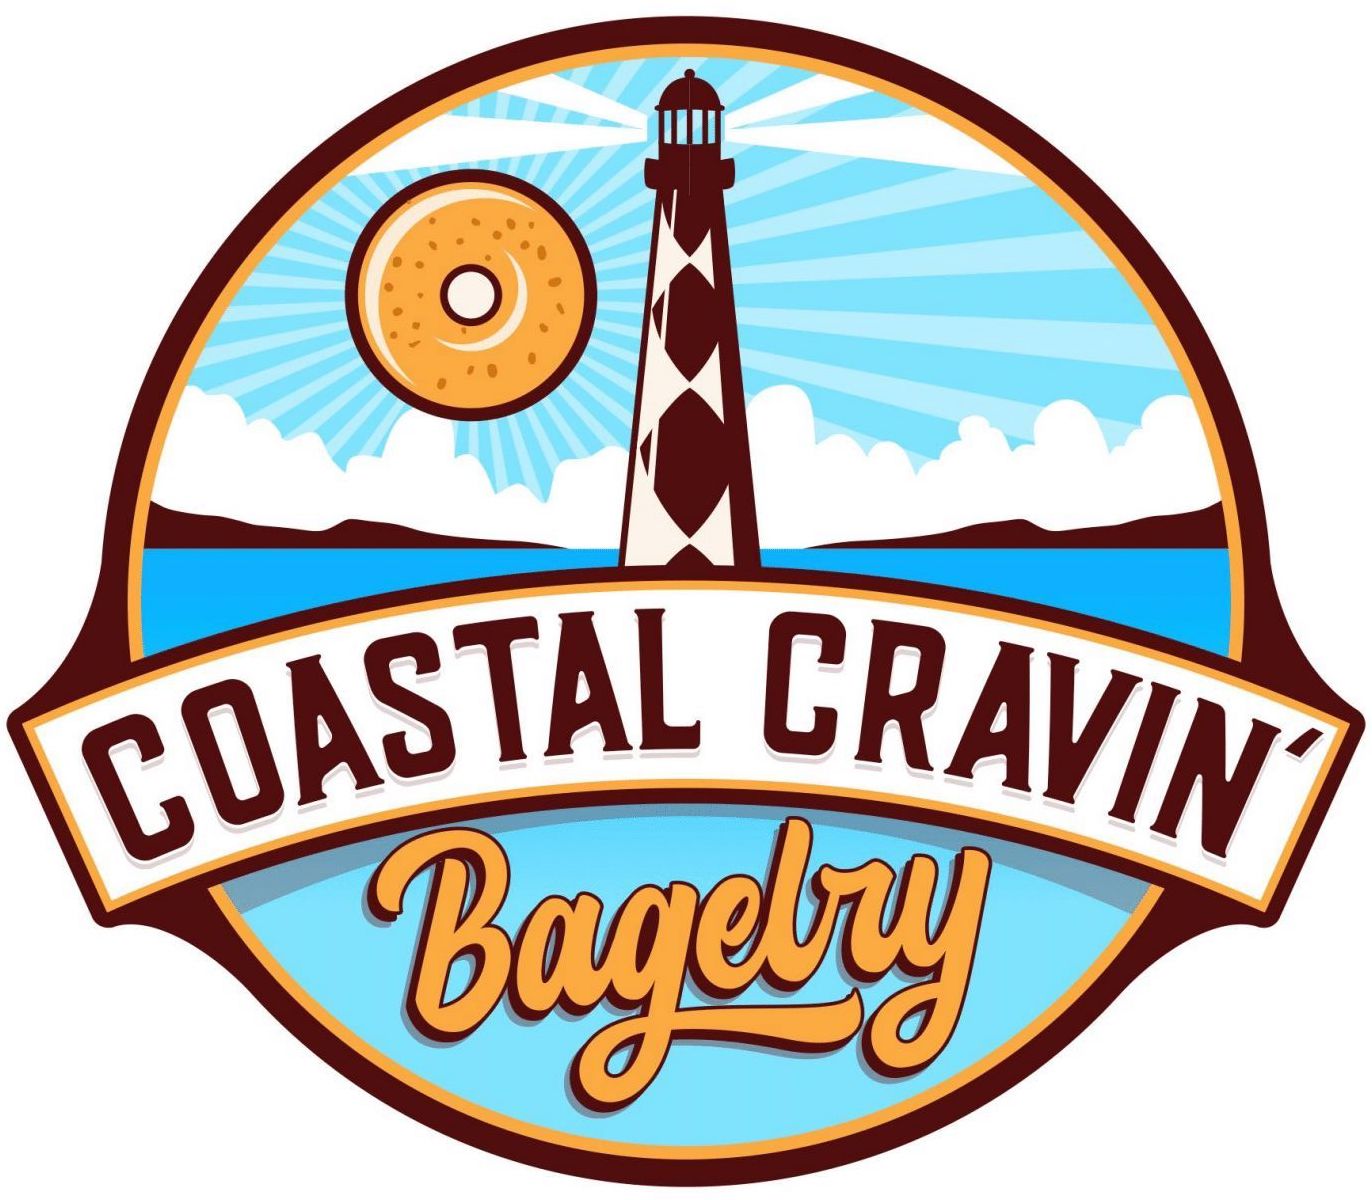 Coastal Cravin' Bagelry Home